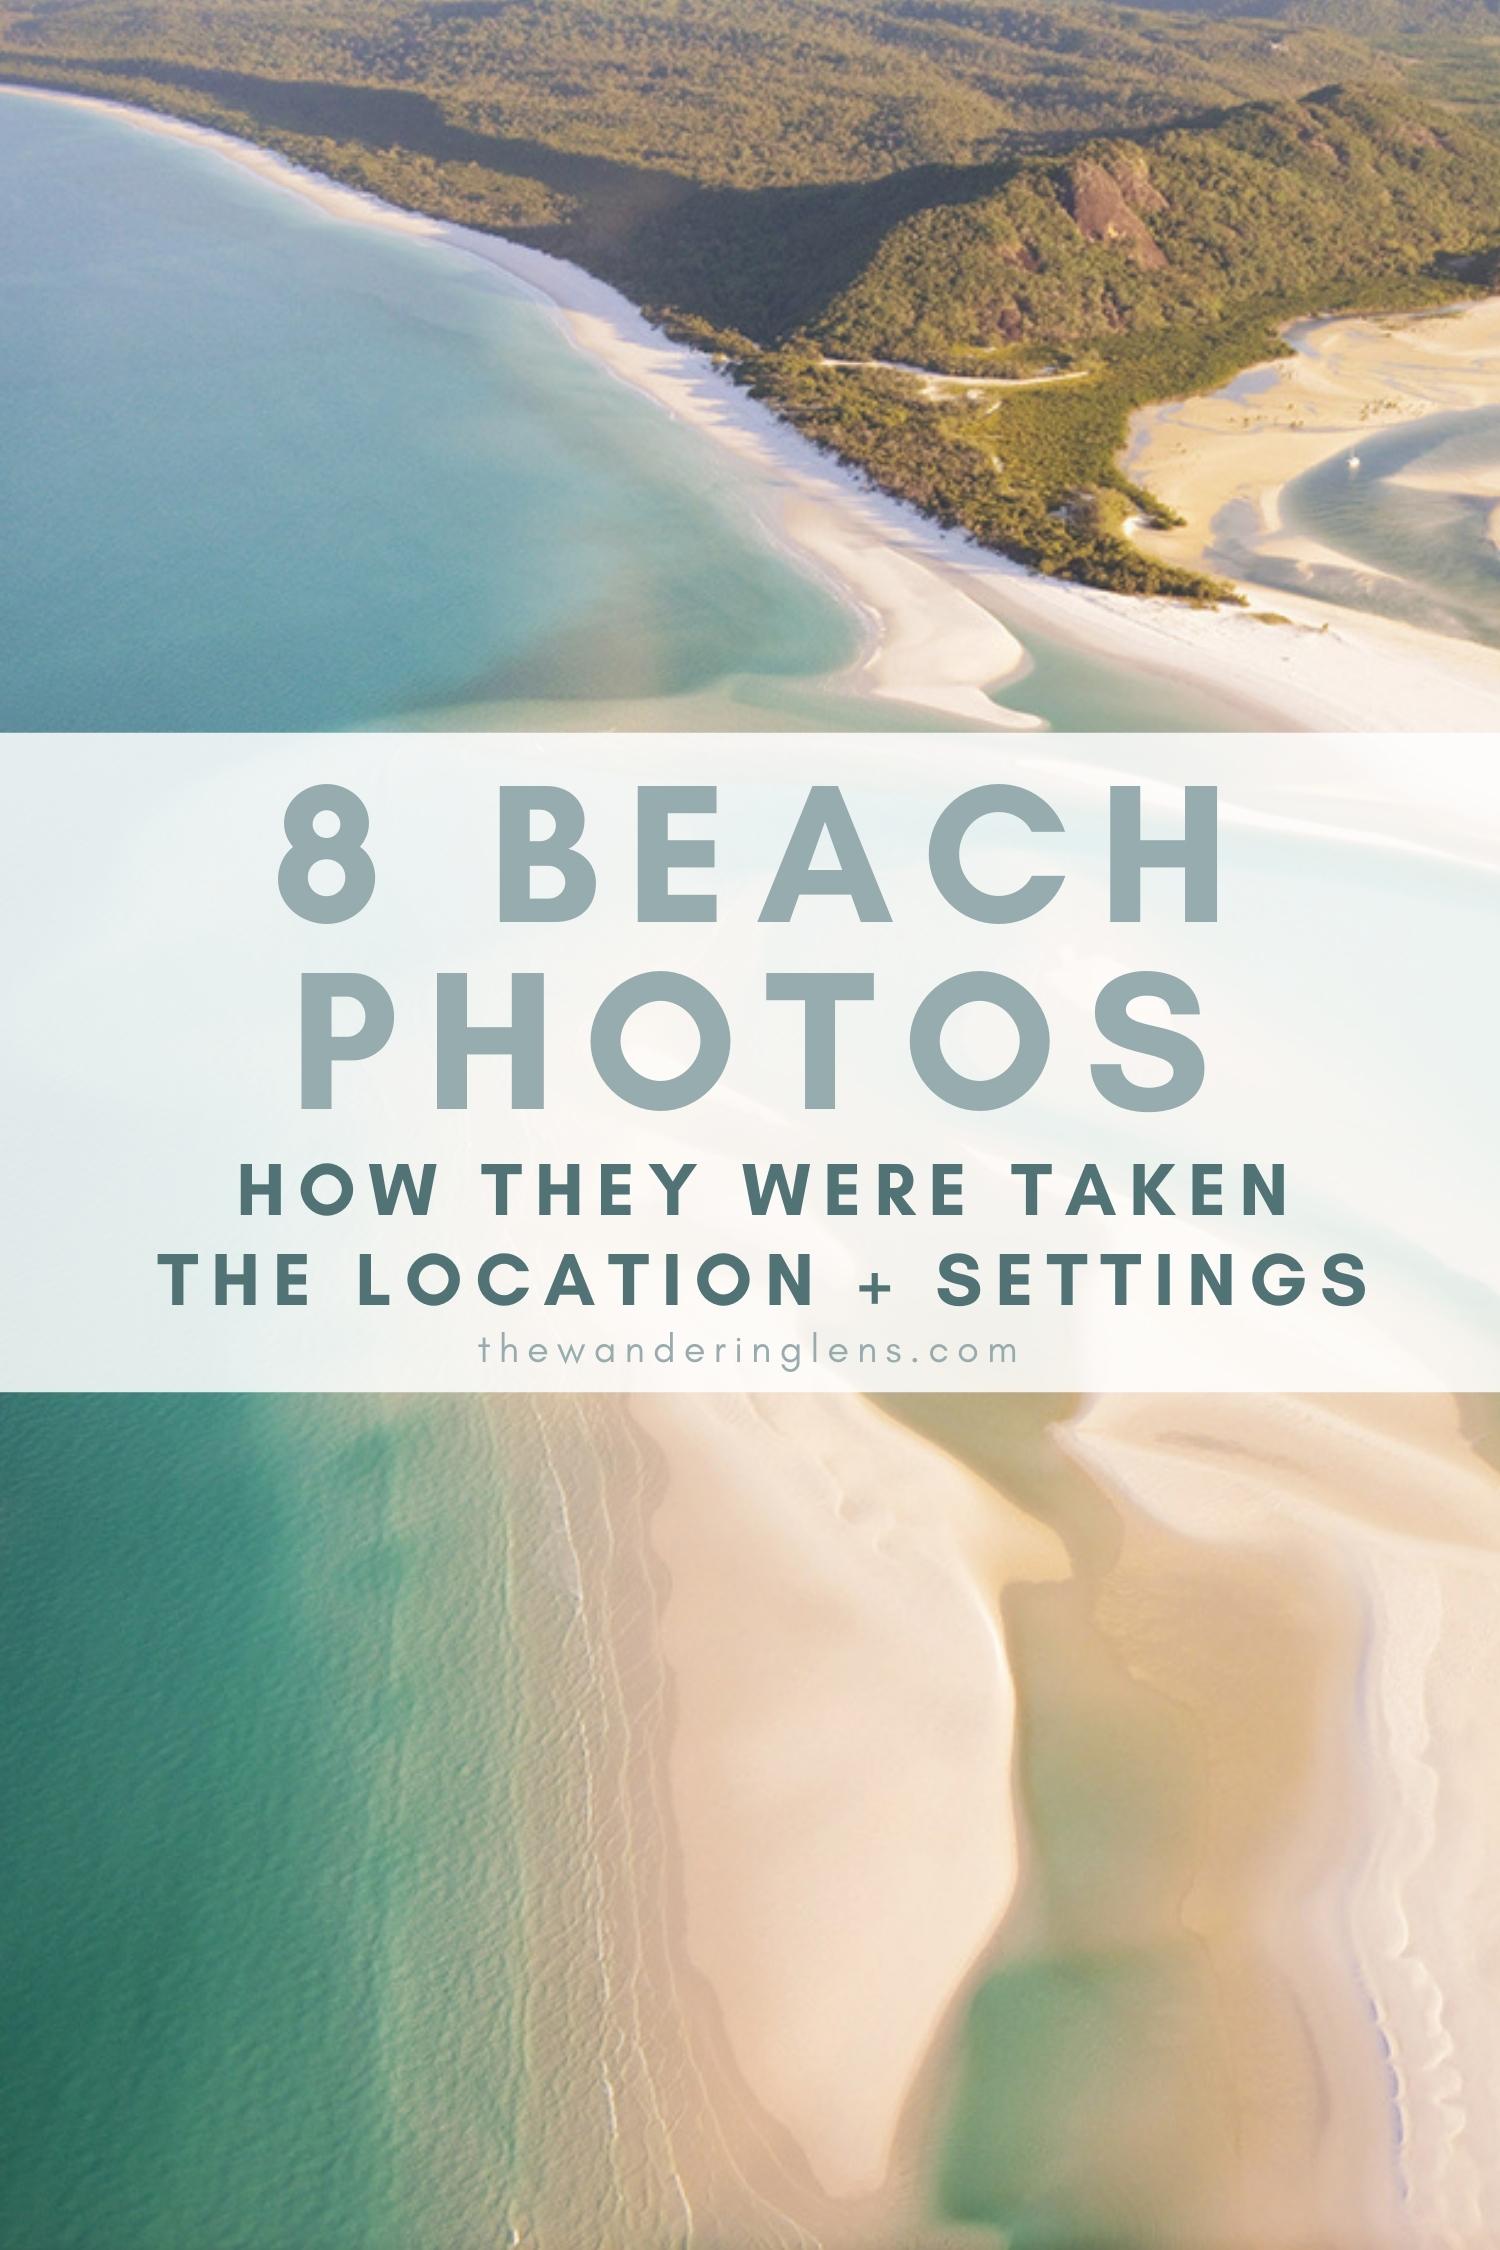 Beach Photos - A collection of 8 beach photos and where they were taken.